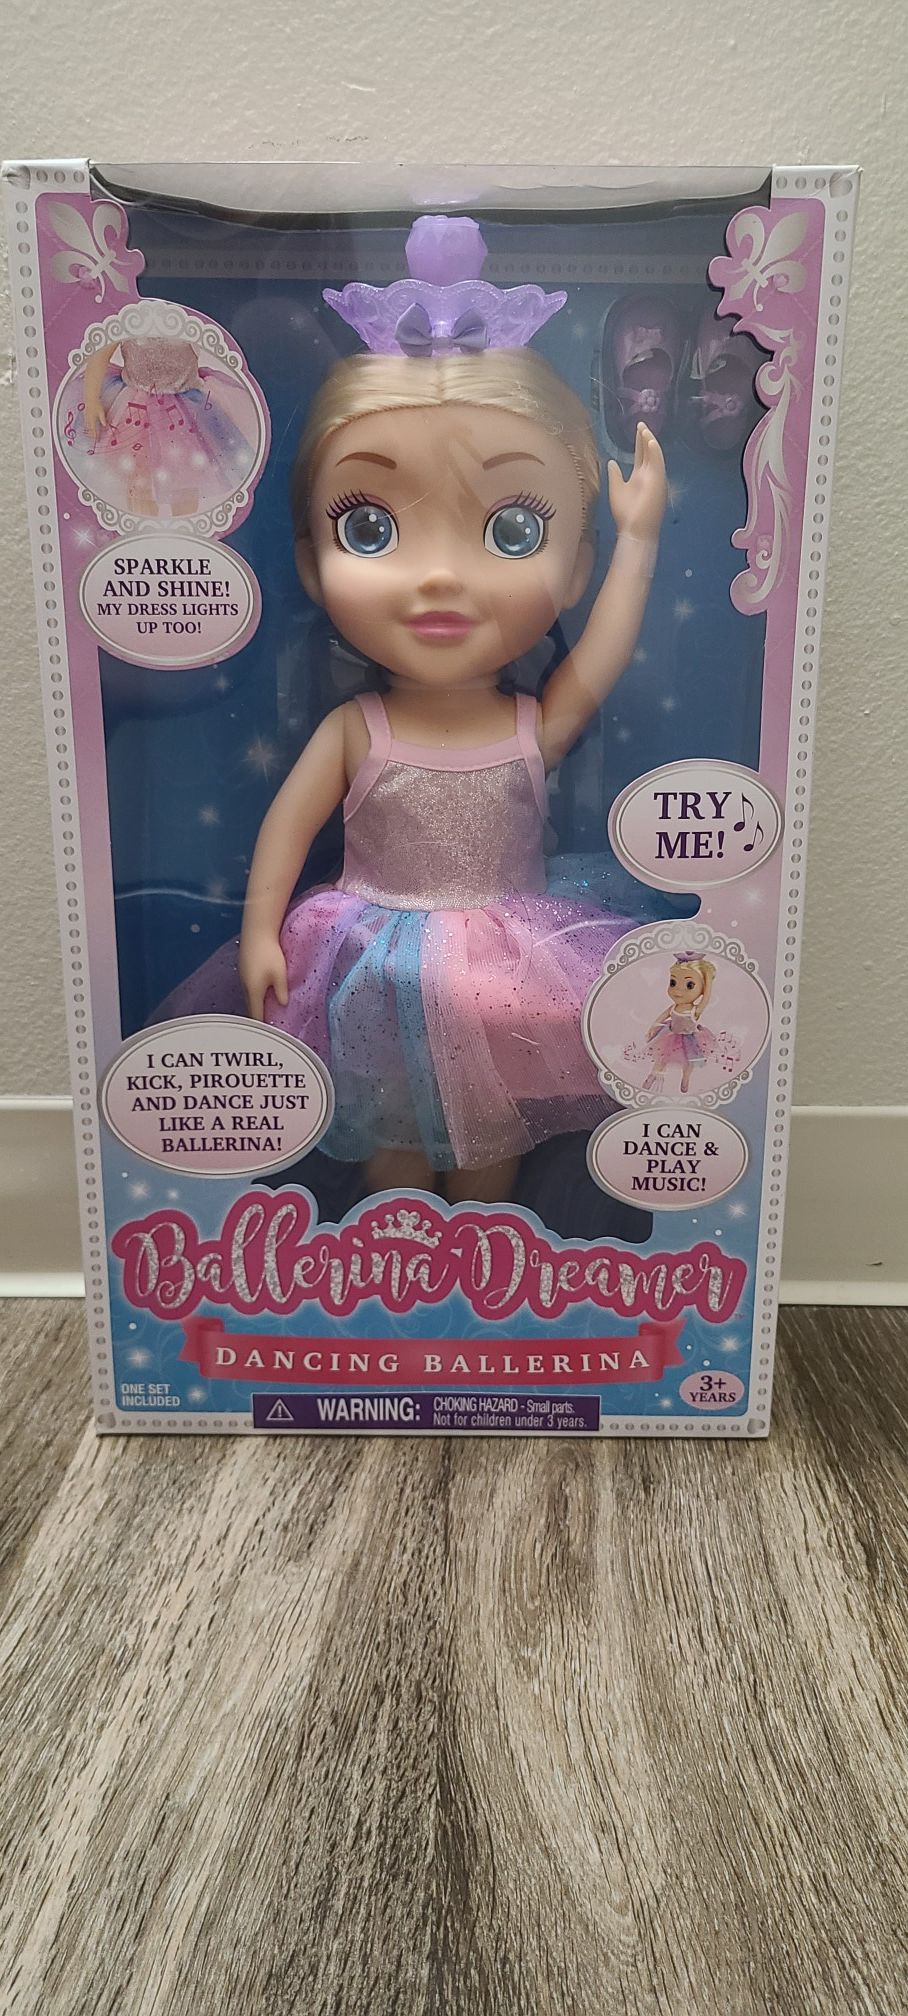 Dreamer ballerina dancing doll